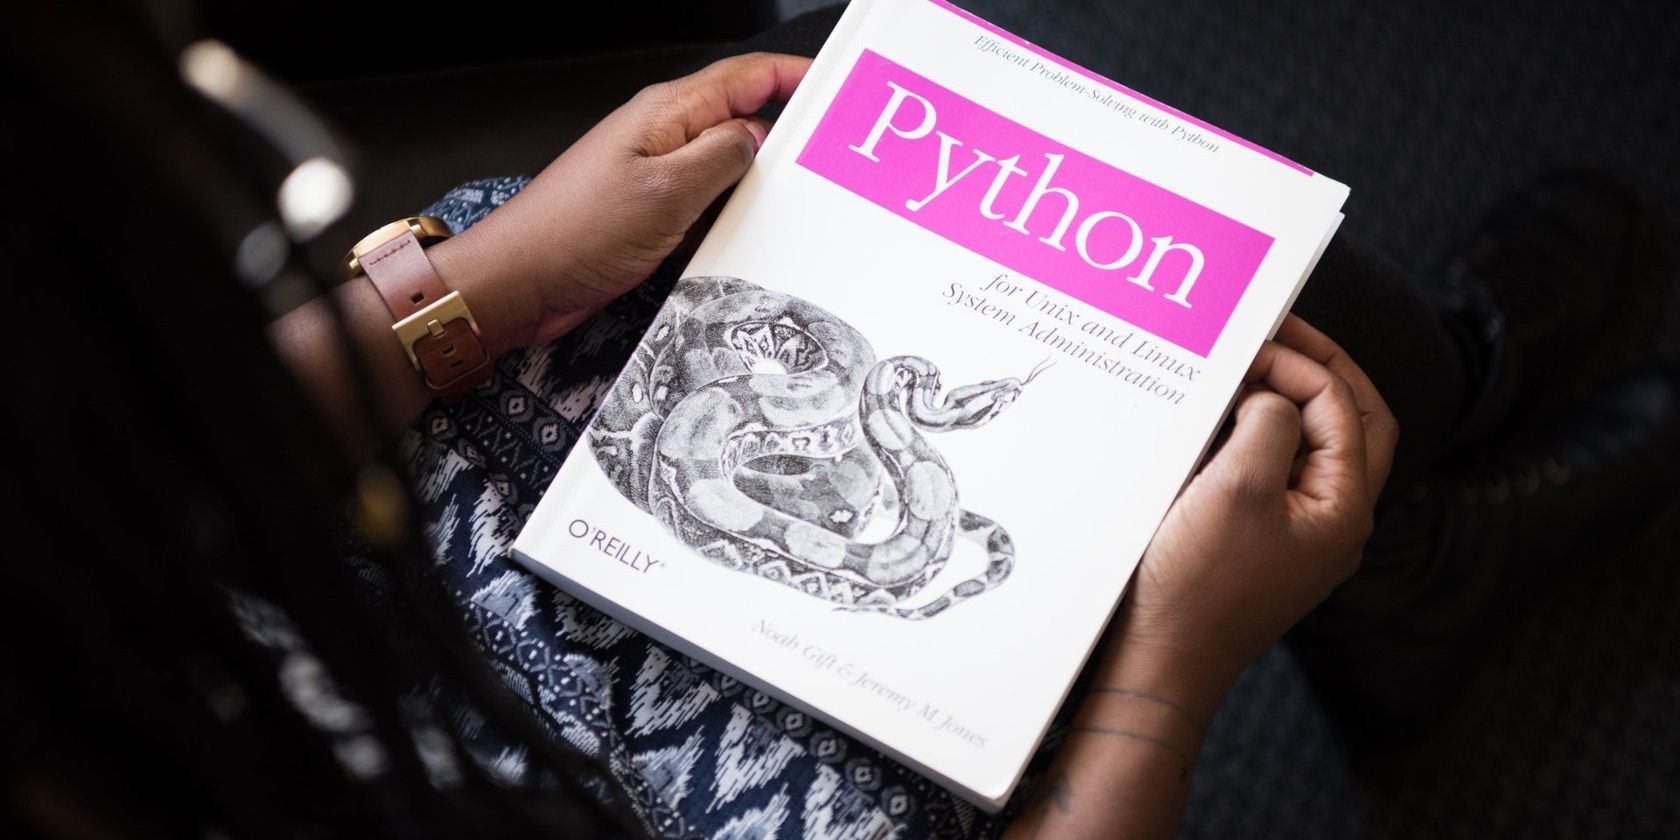 Hand holding a Python tutorial manual